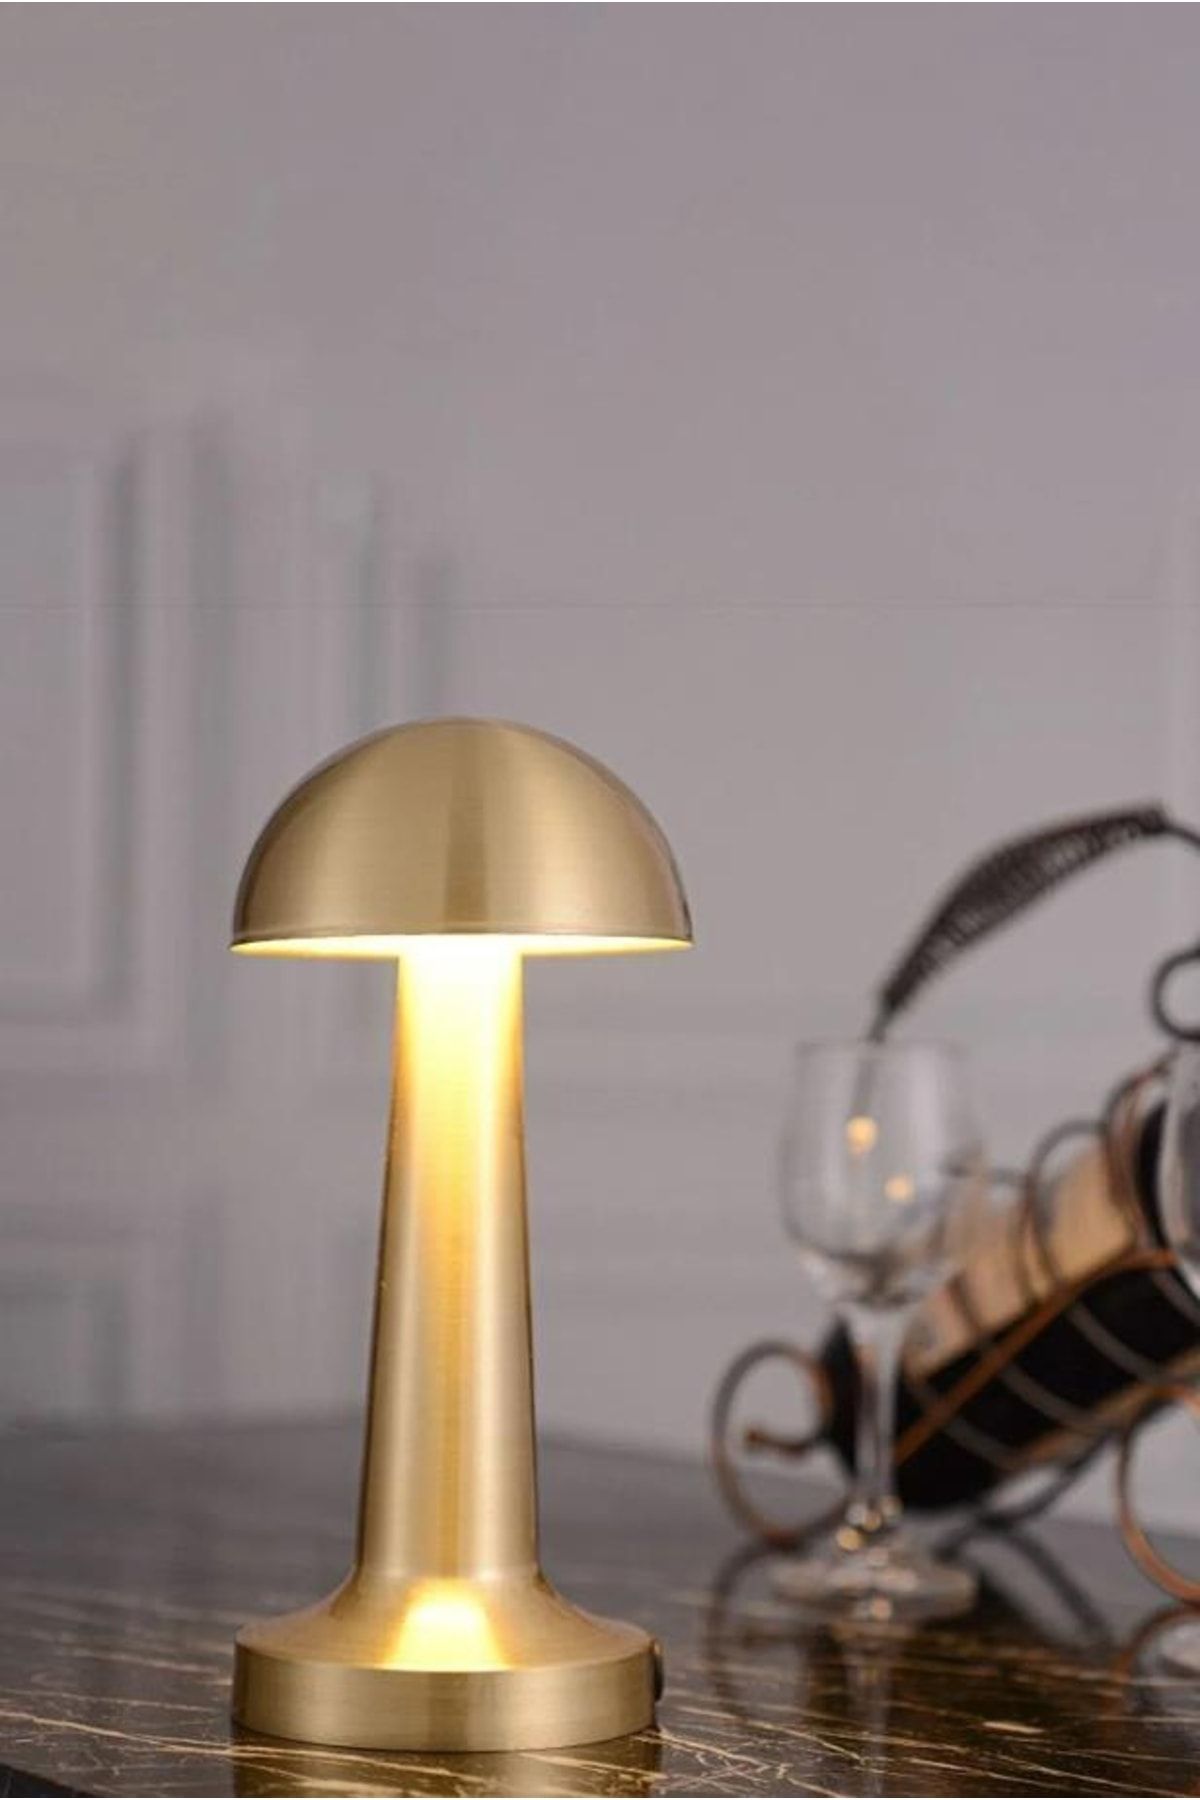 MiniHome Mantar Model Dimmerli Şarjlı Retro Masa Lambası Gold